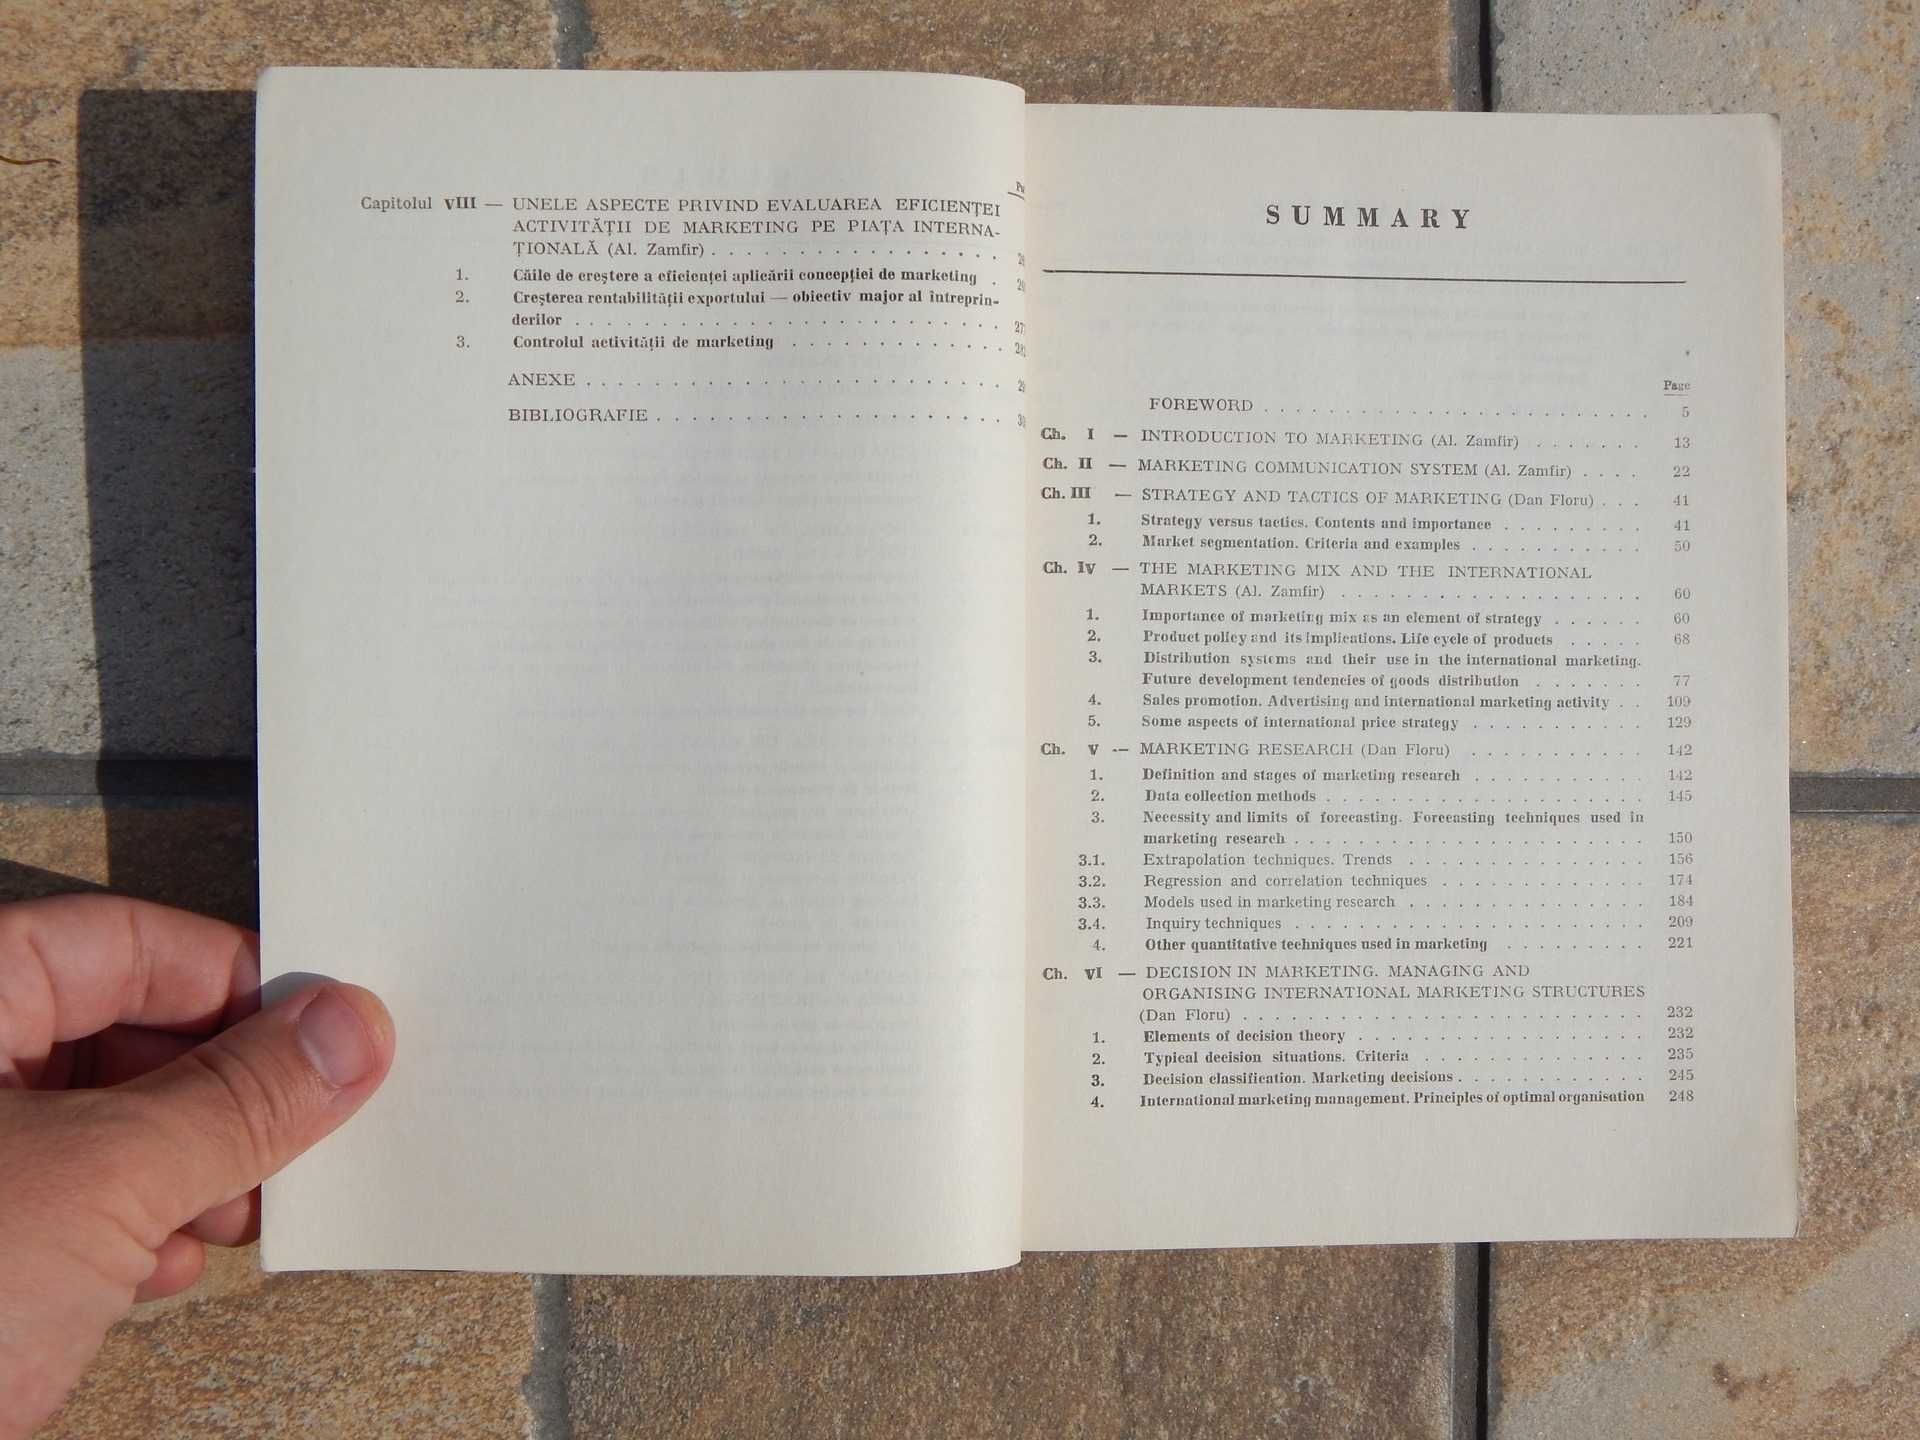 Elemente marketing international Zamfir Floru Editura Academiei 1974